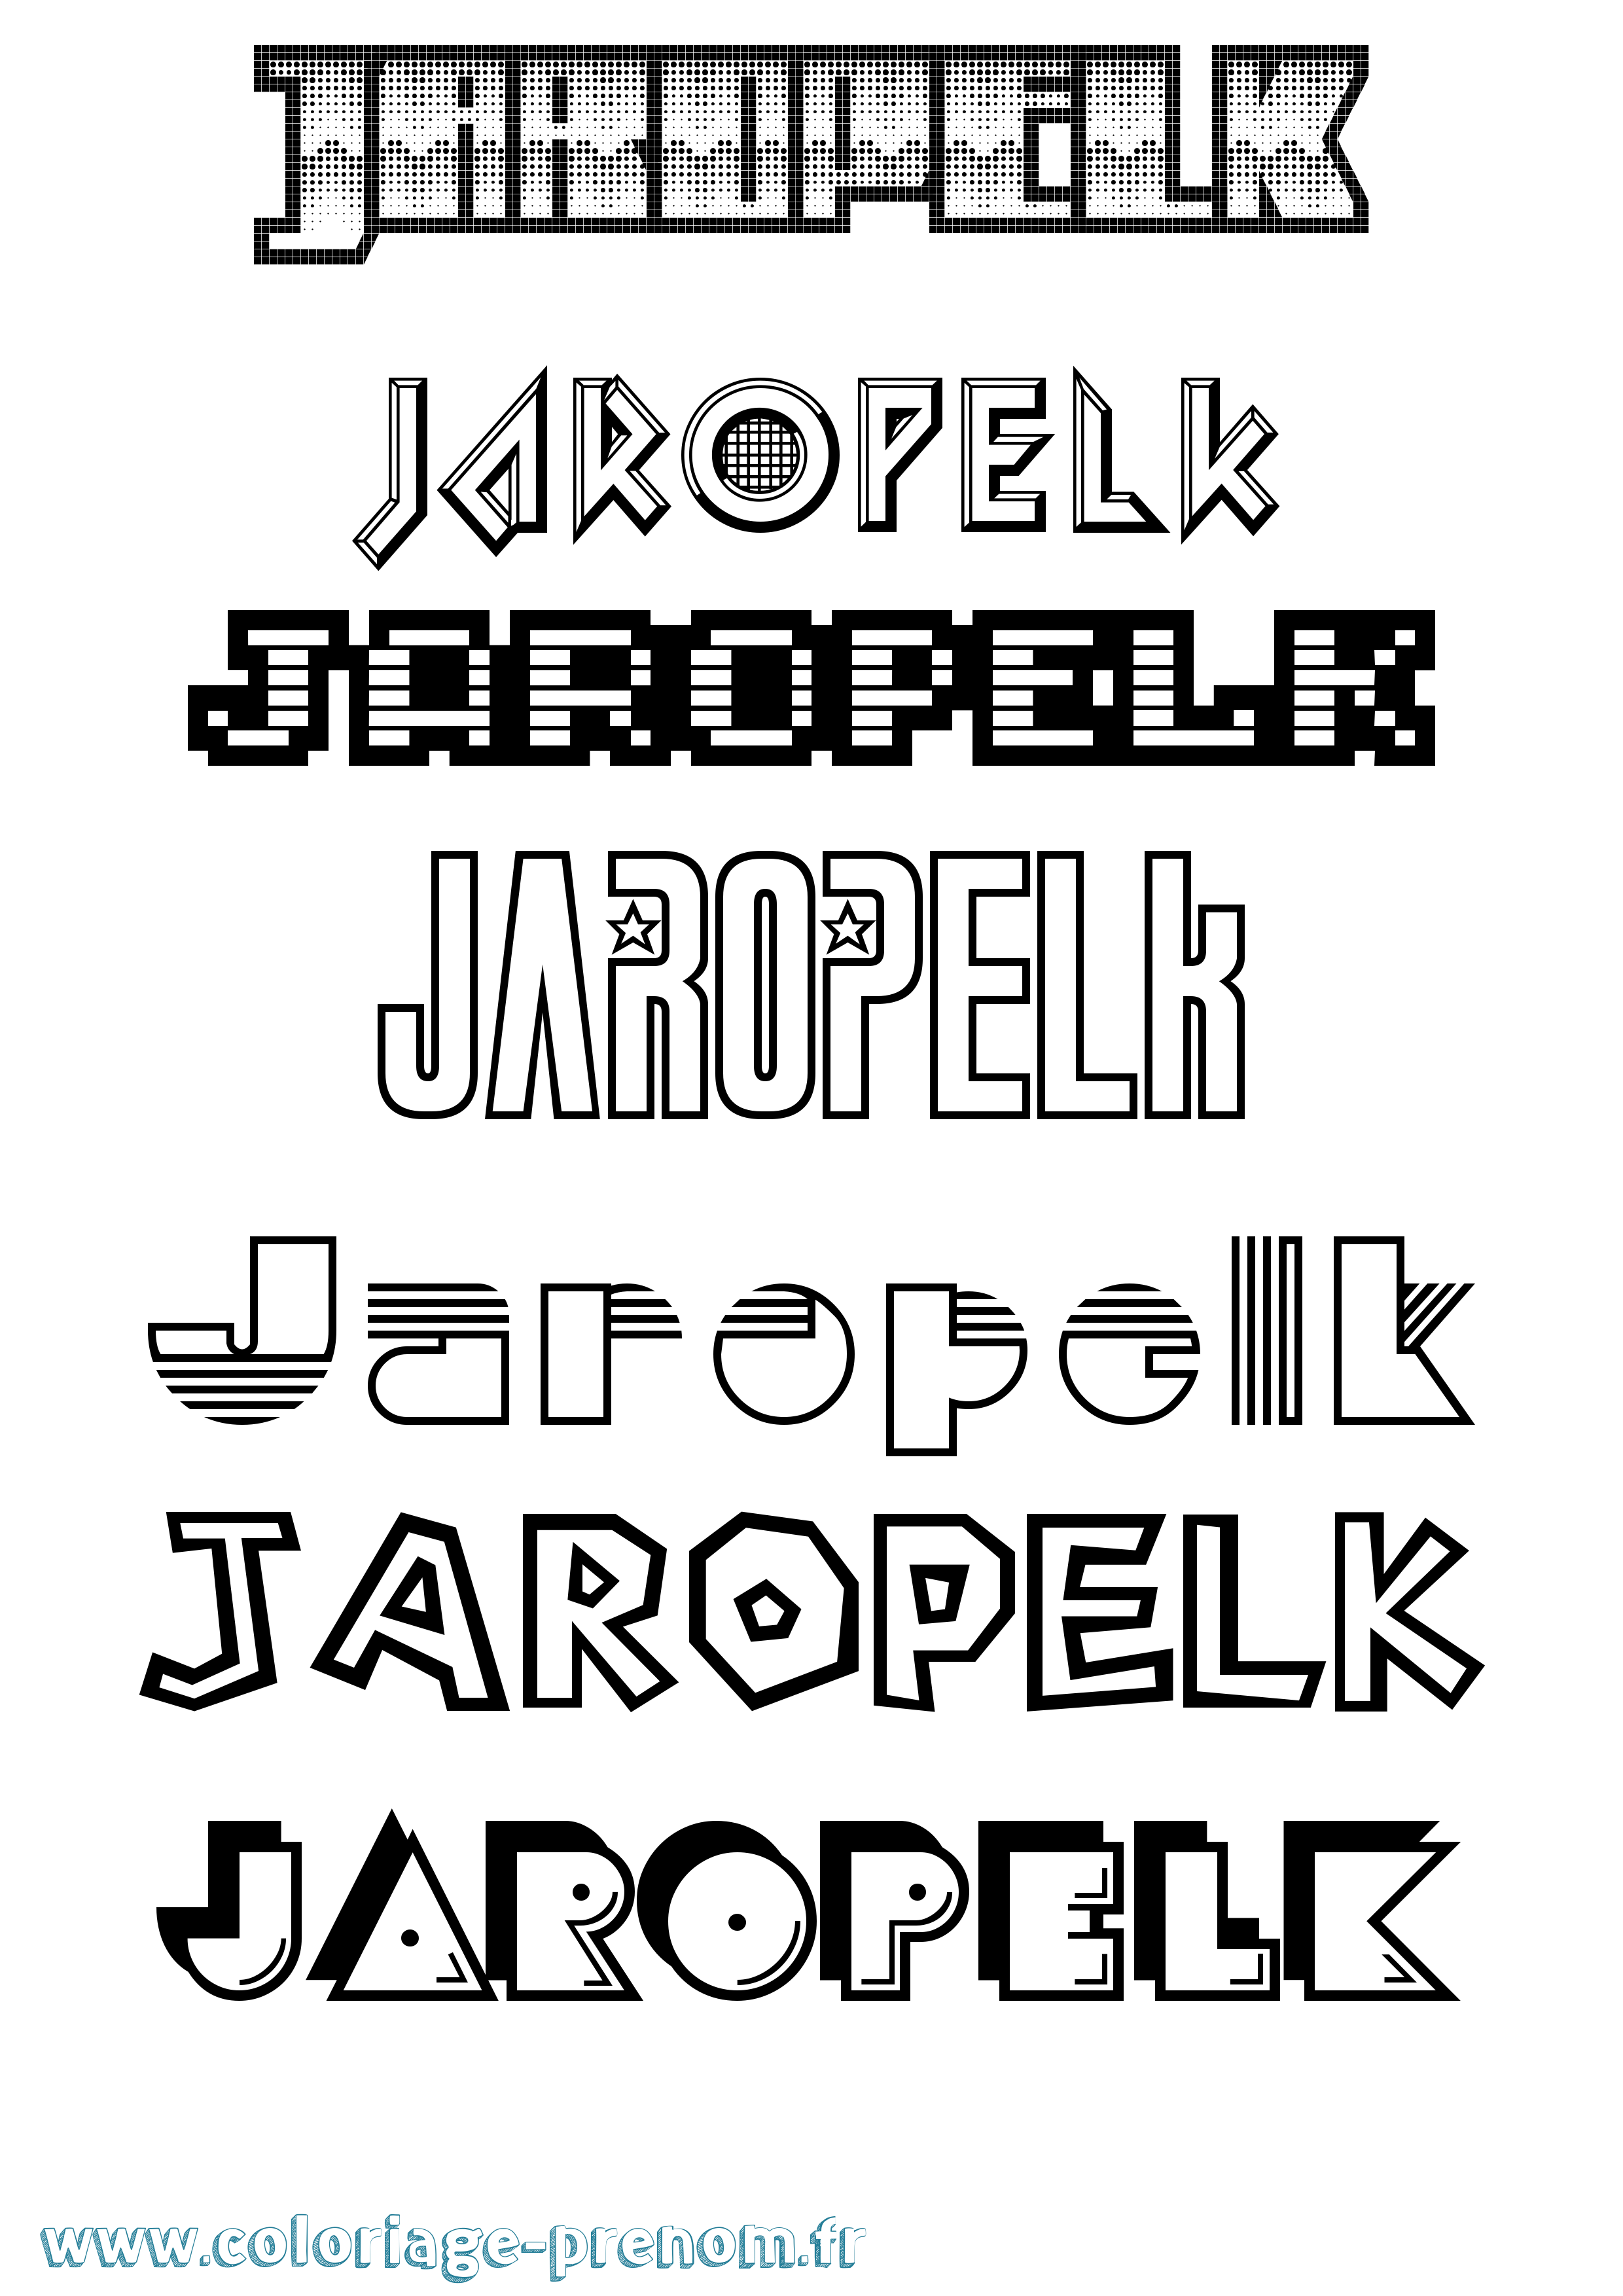 Coloriage prénom Jaropelk Jeux Vidéos